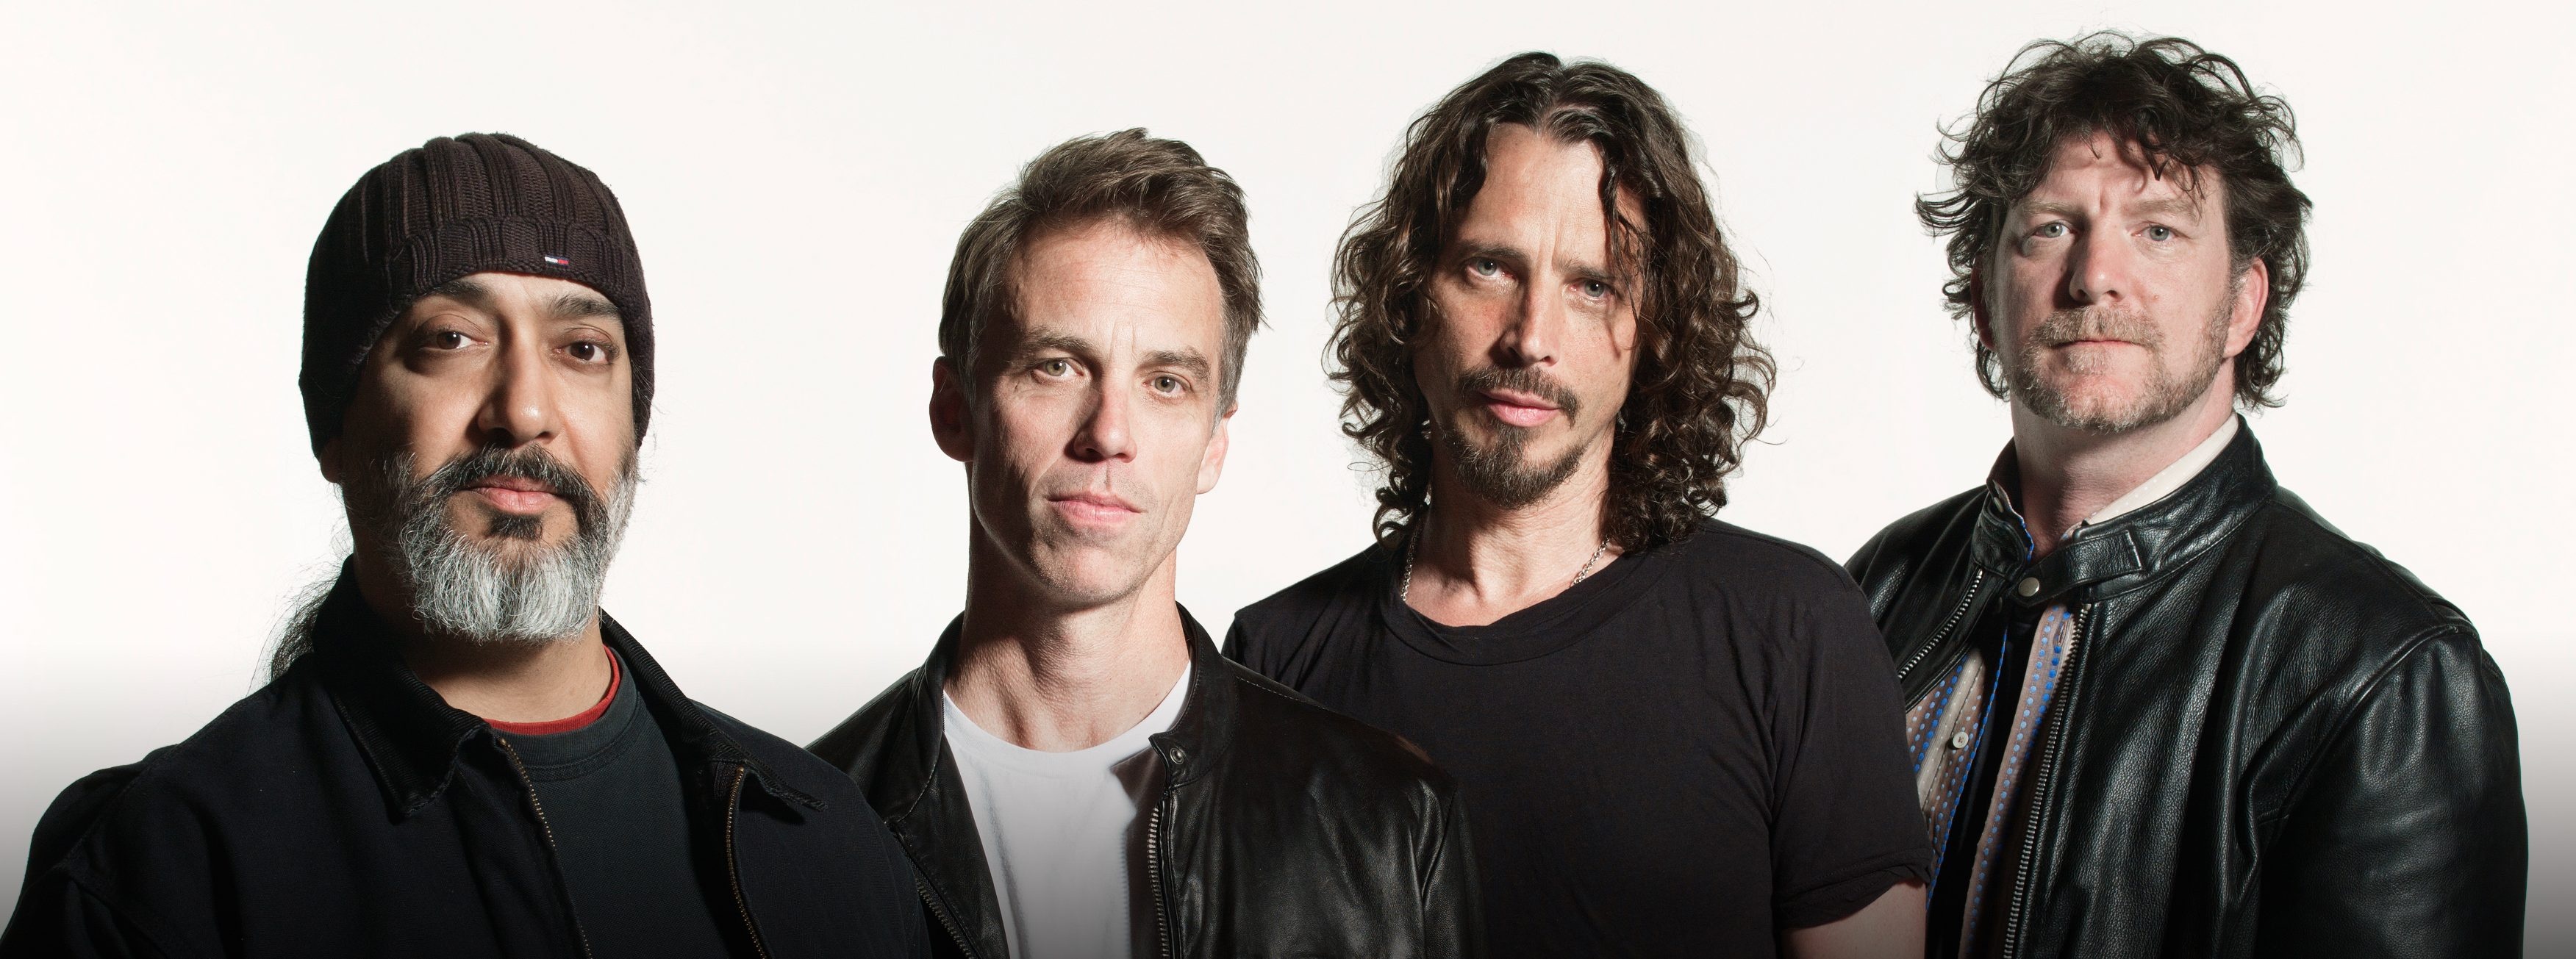 Soundgarden, Group statement, Self-reflection, 3510x1310 Dual Screen Desktop